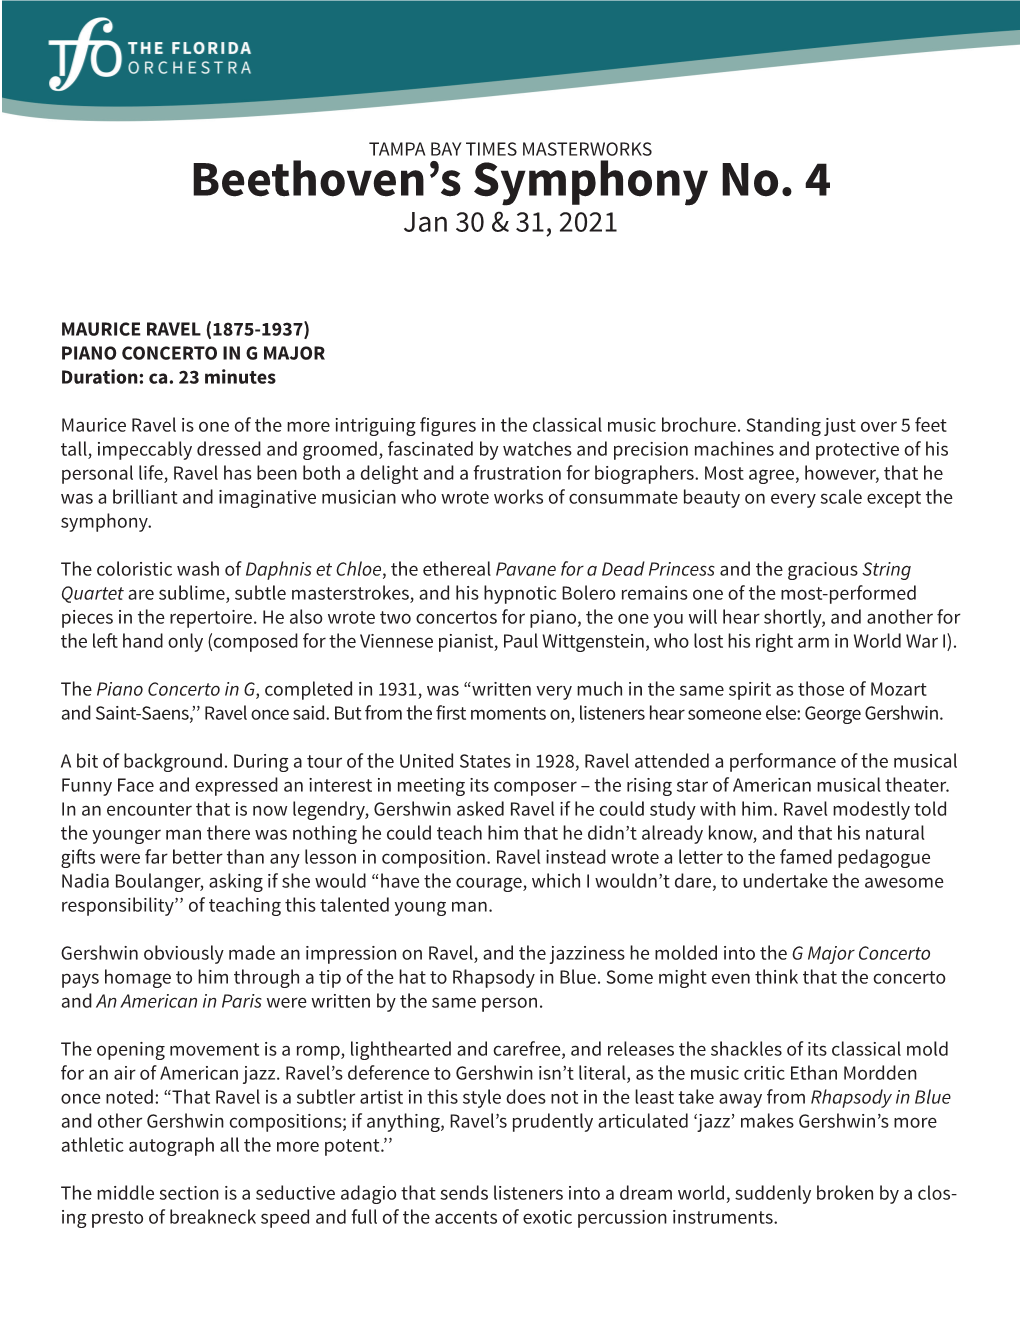 Beethoven's Symphony No. 4